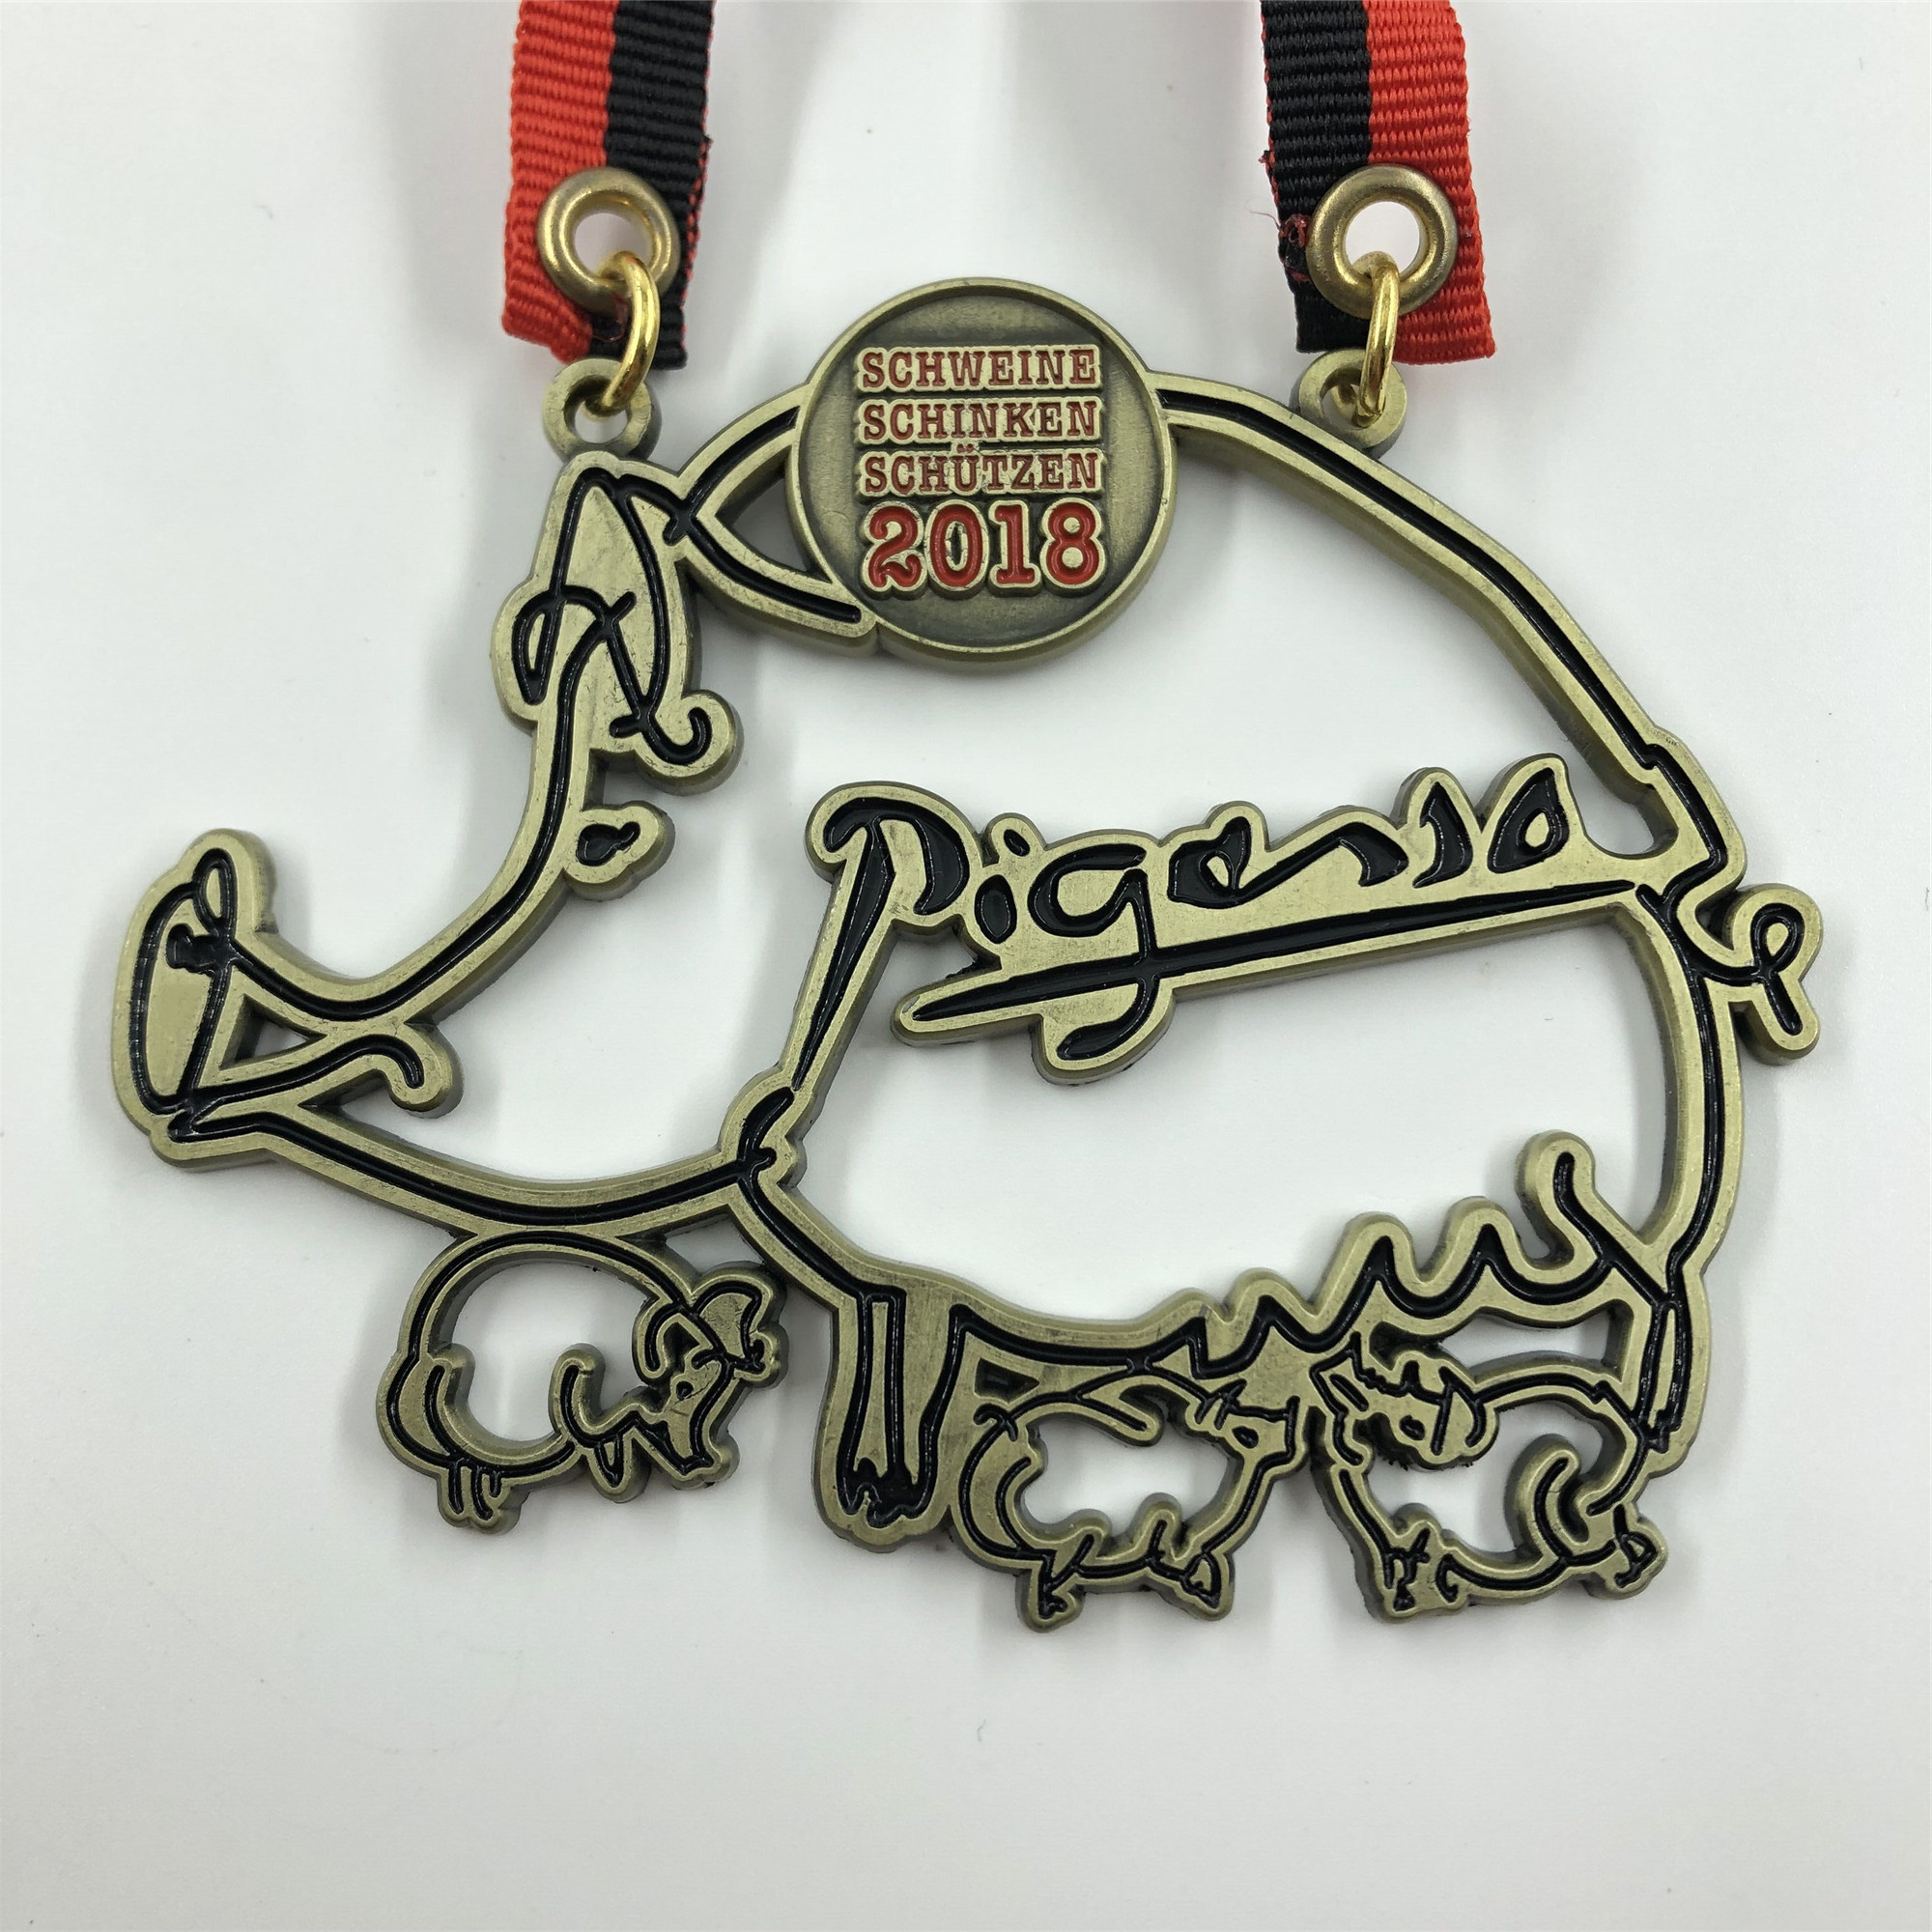 Hot Sale Product Gal Soft Enamel Medal Devils Carnival Metal Zinc Alloy Medallions With Webbing